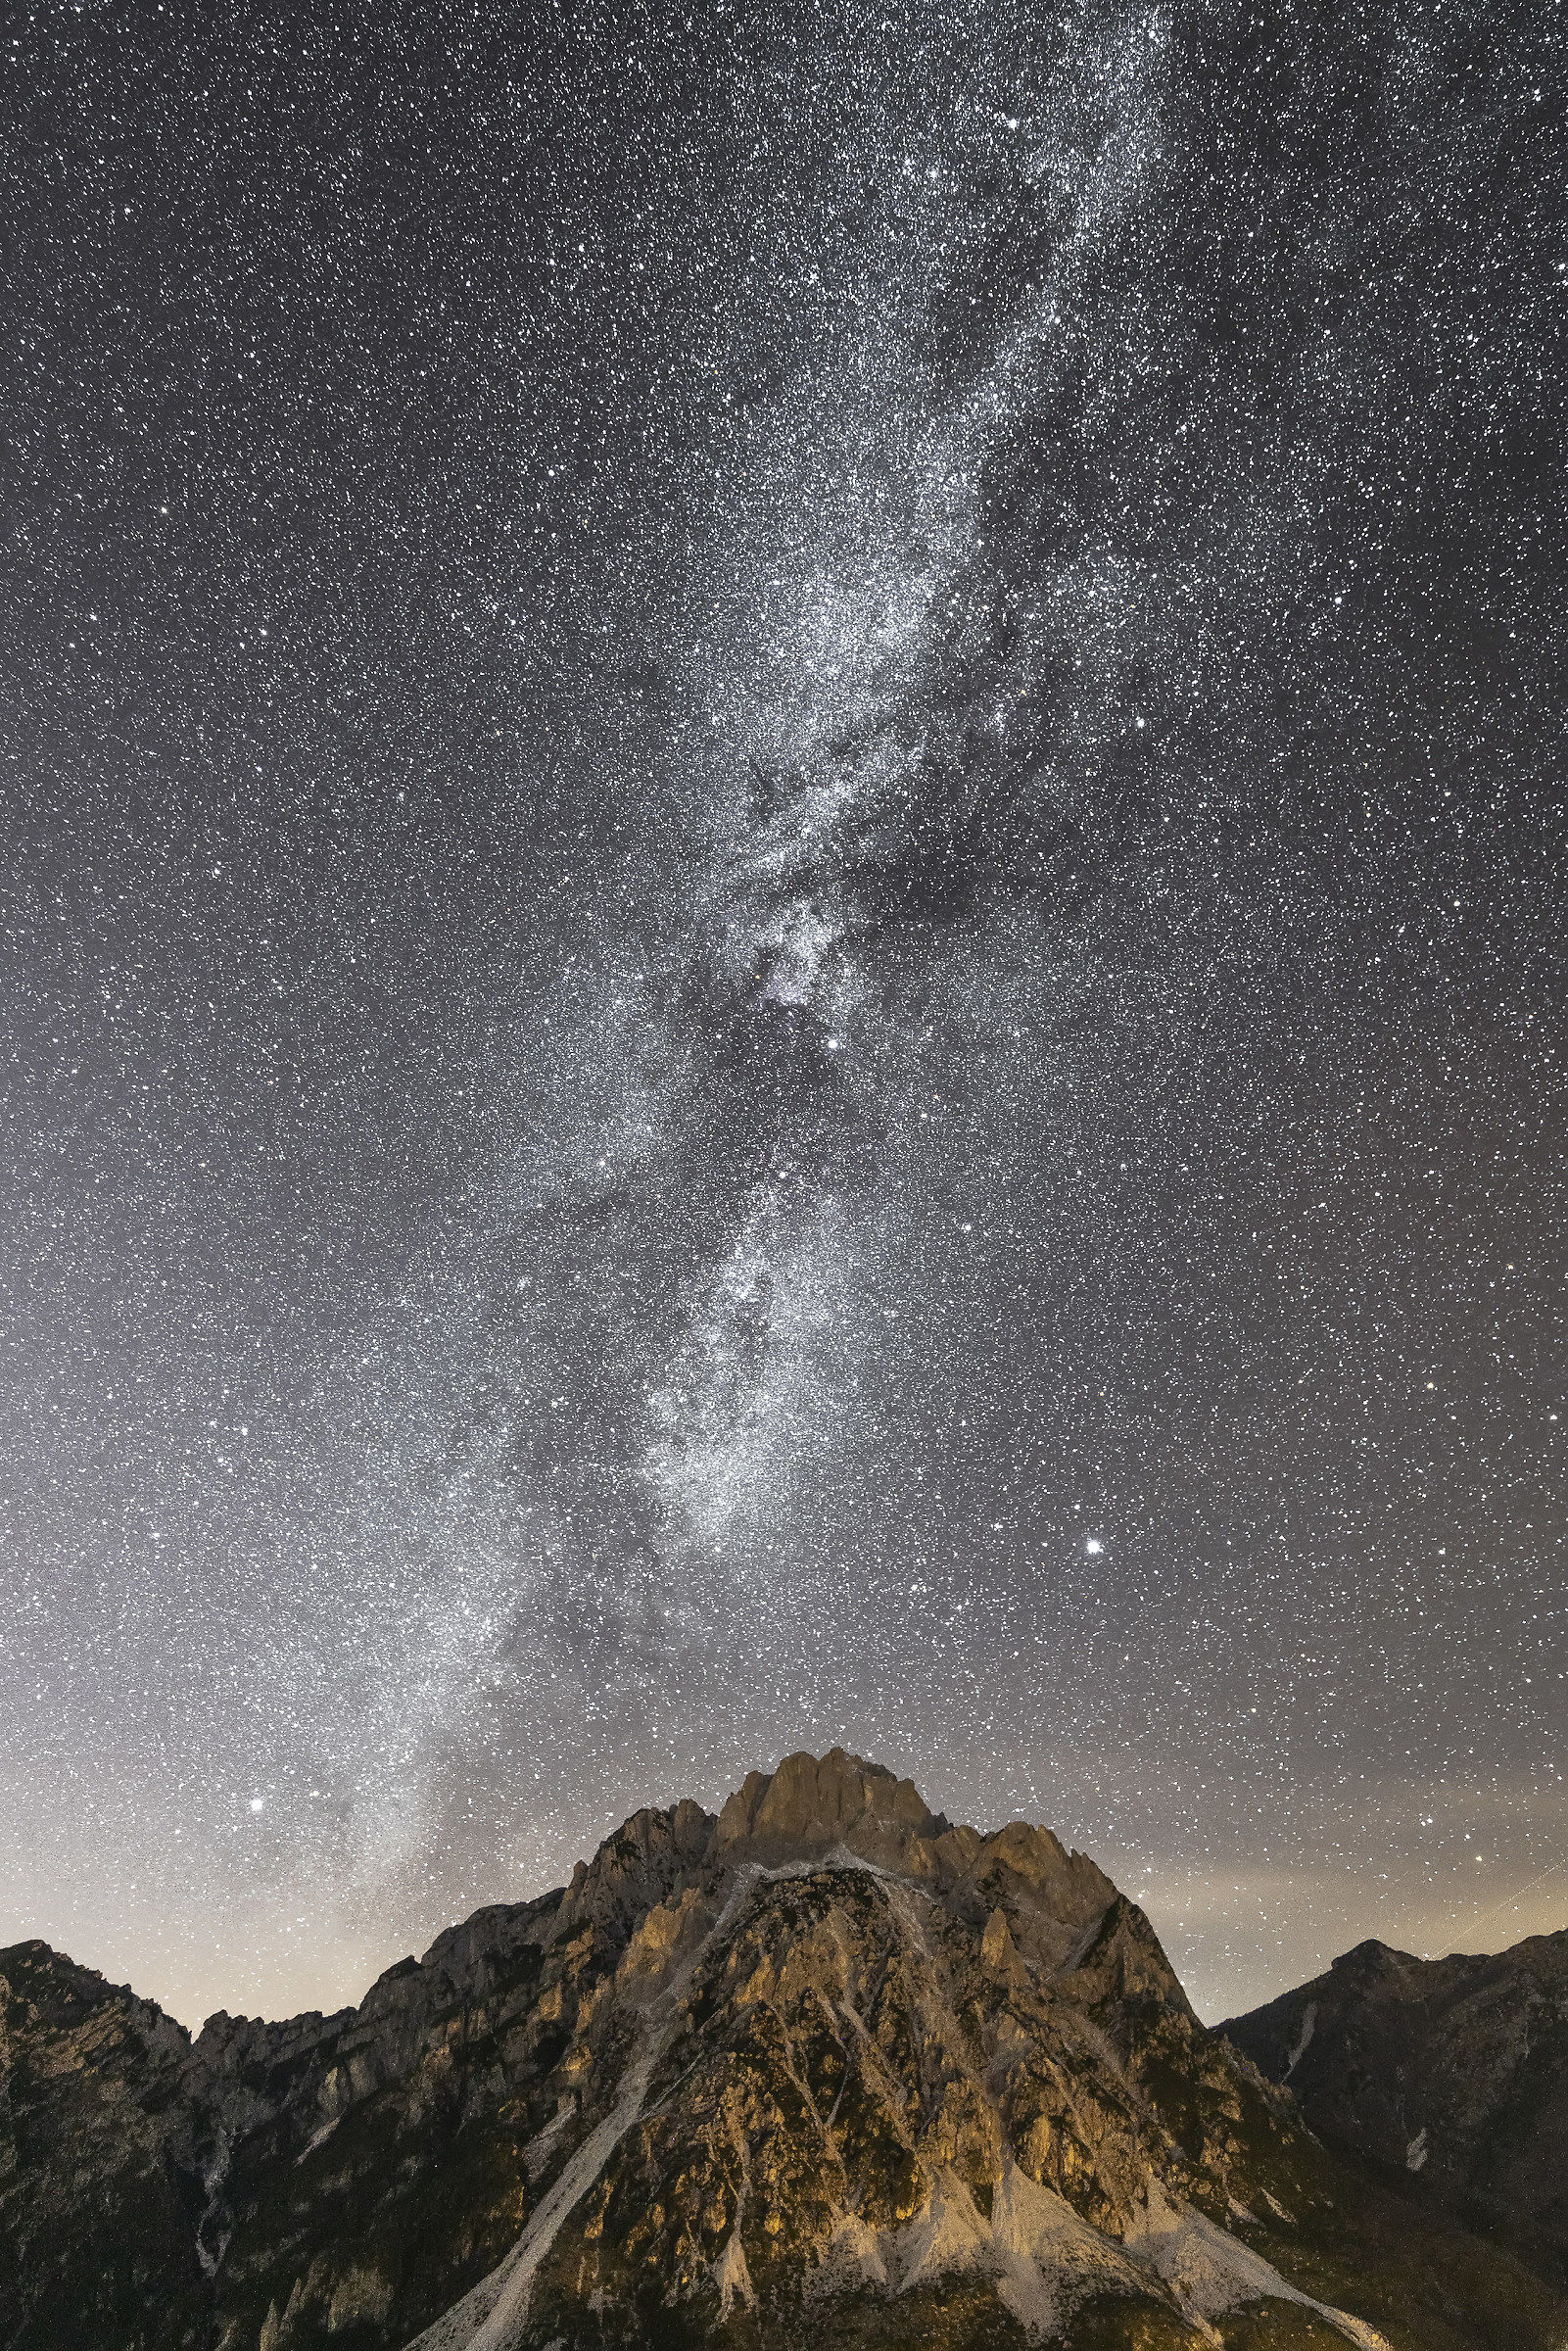 Crete Grauzaria and Milky Way (Carnic Alps)...